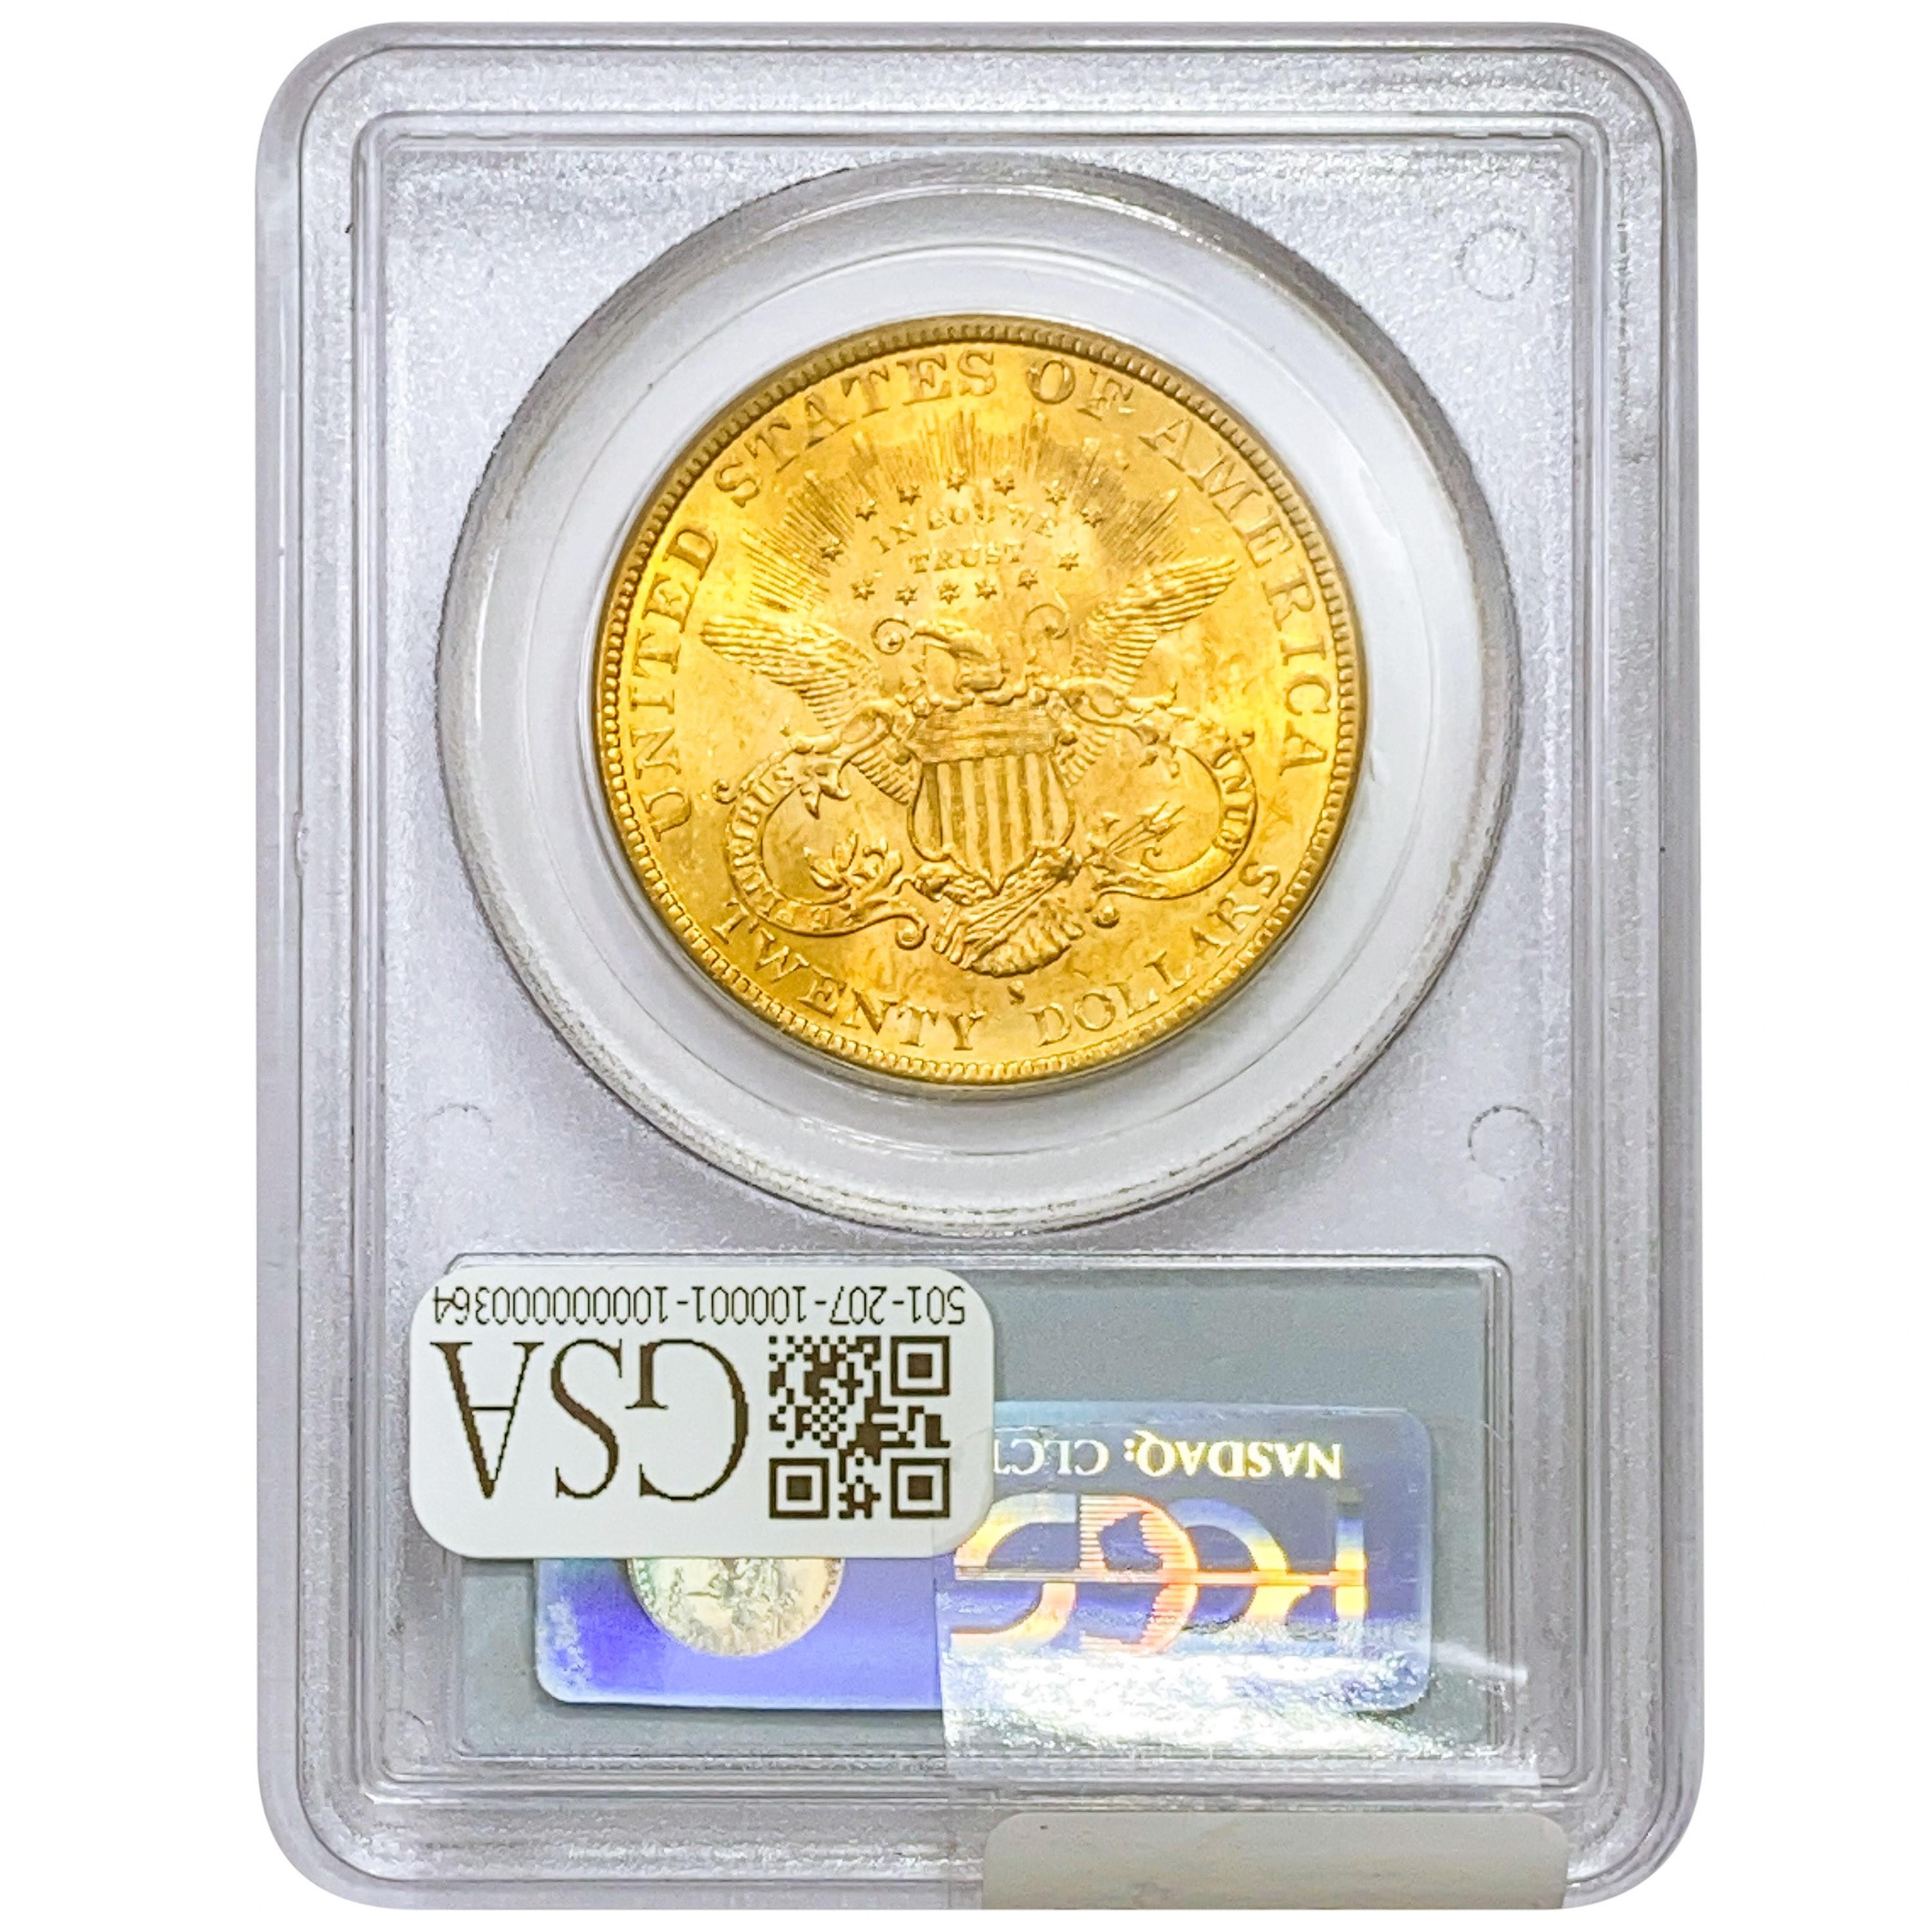 1894-S $20 Gold Double Eagle PCGS MS62